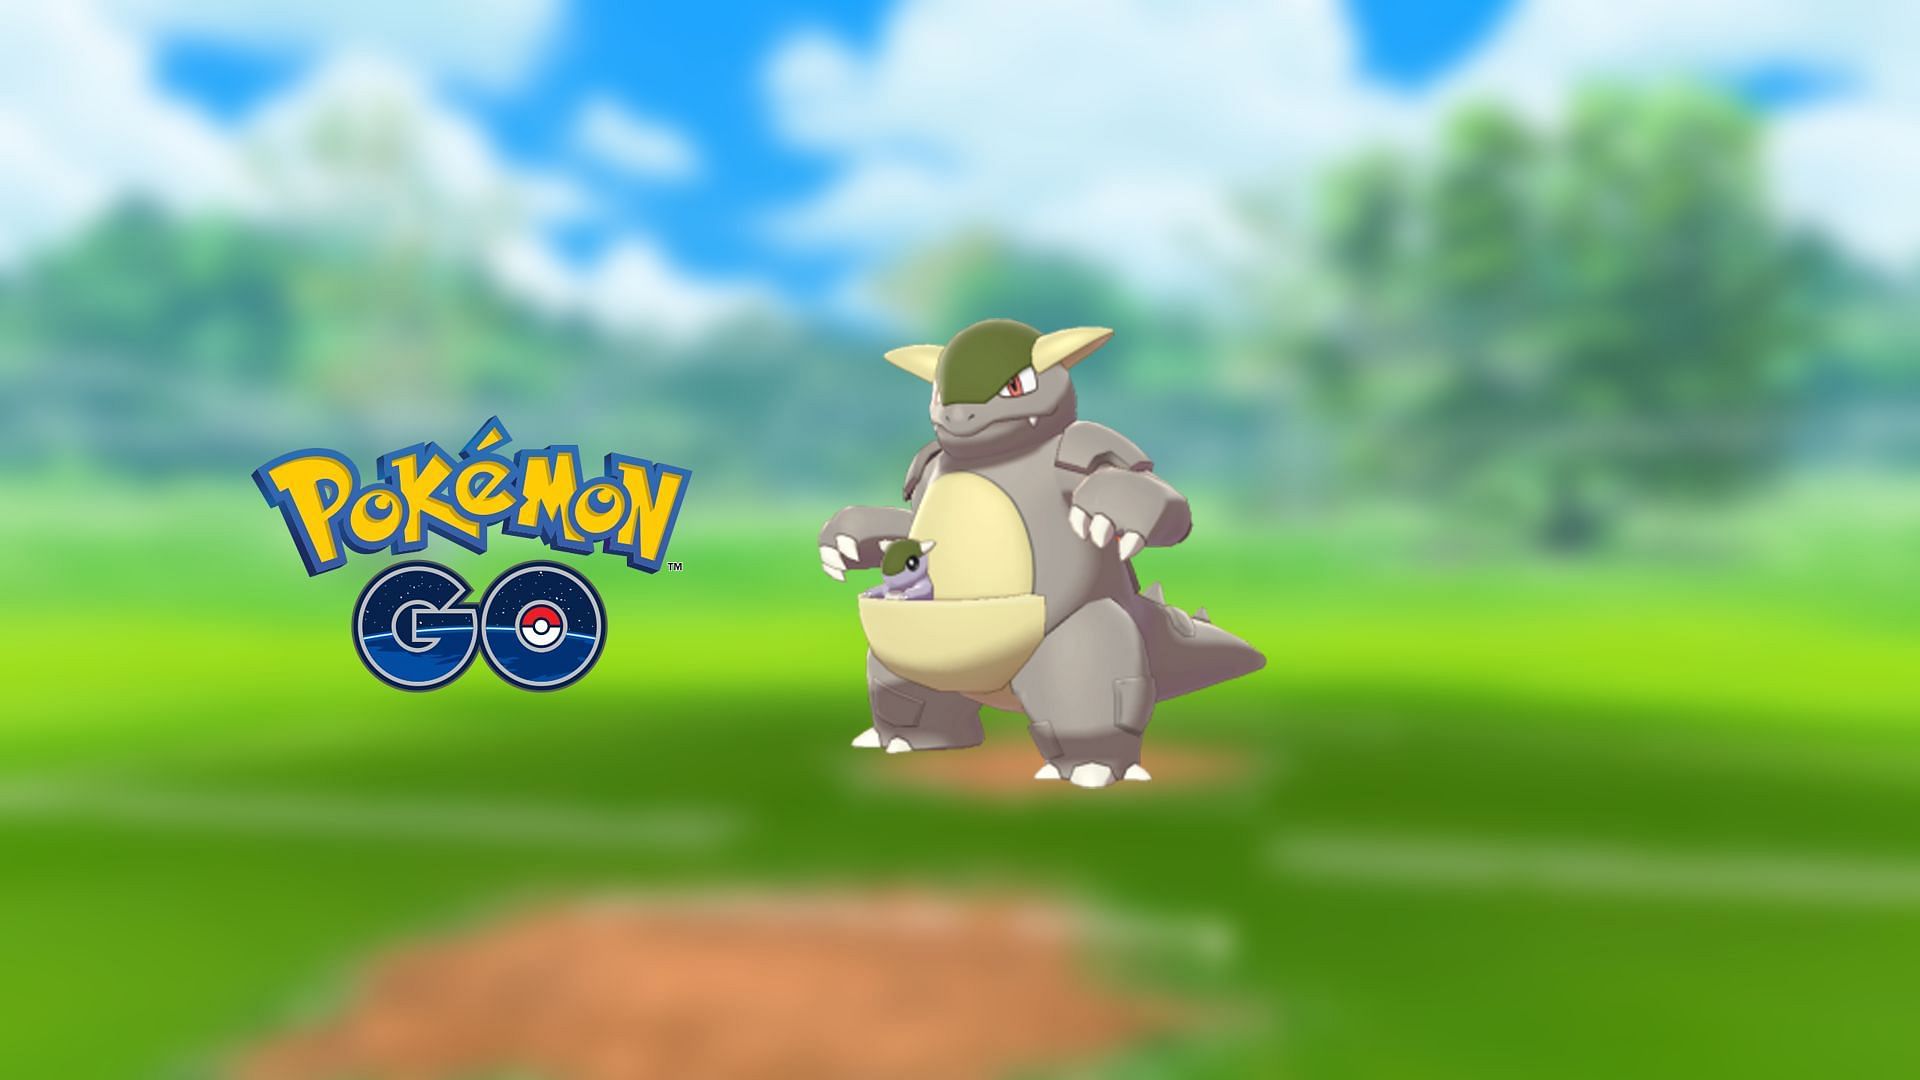 How to Catch a Shiny Kangaskhan in Pokémon GO